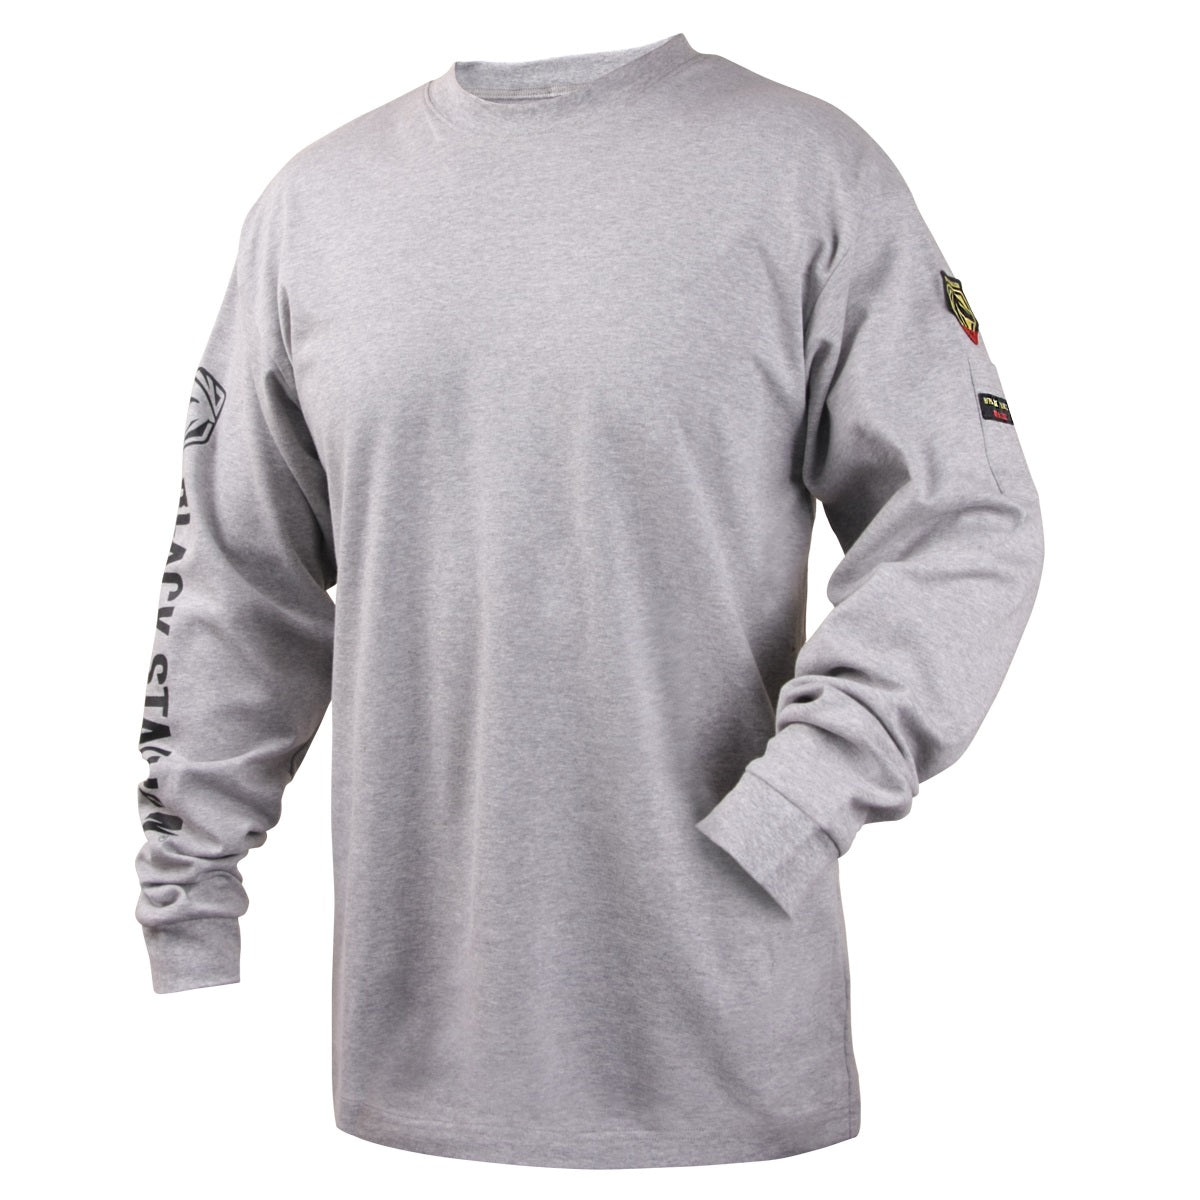 Revco Black Stallion Navy/Navy 7oz FR Welding Jersey Shirt (TF2520-NG)